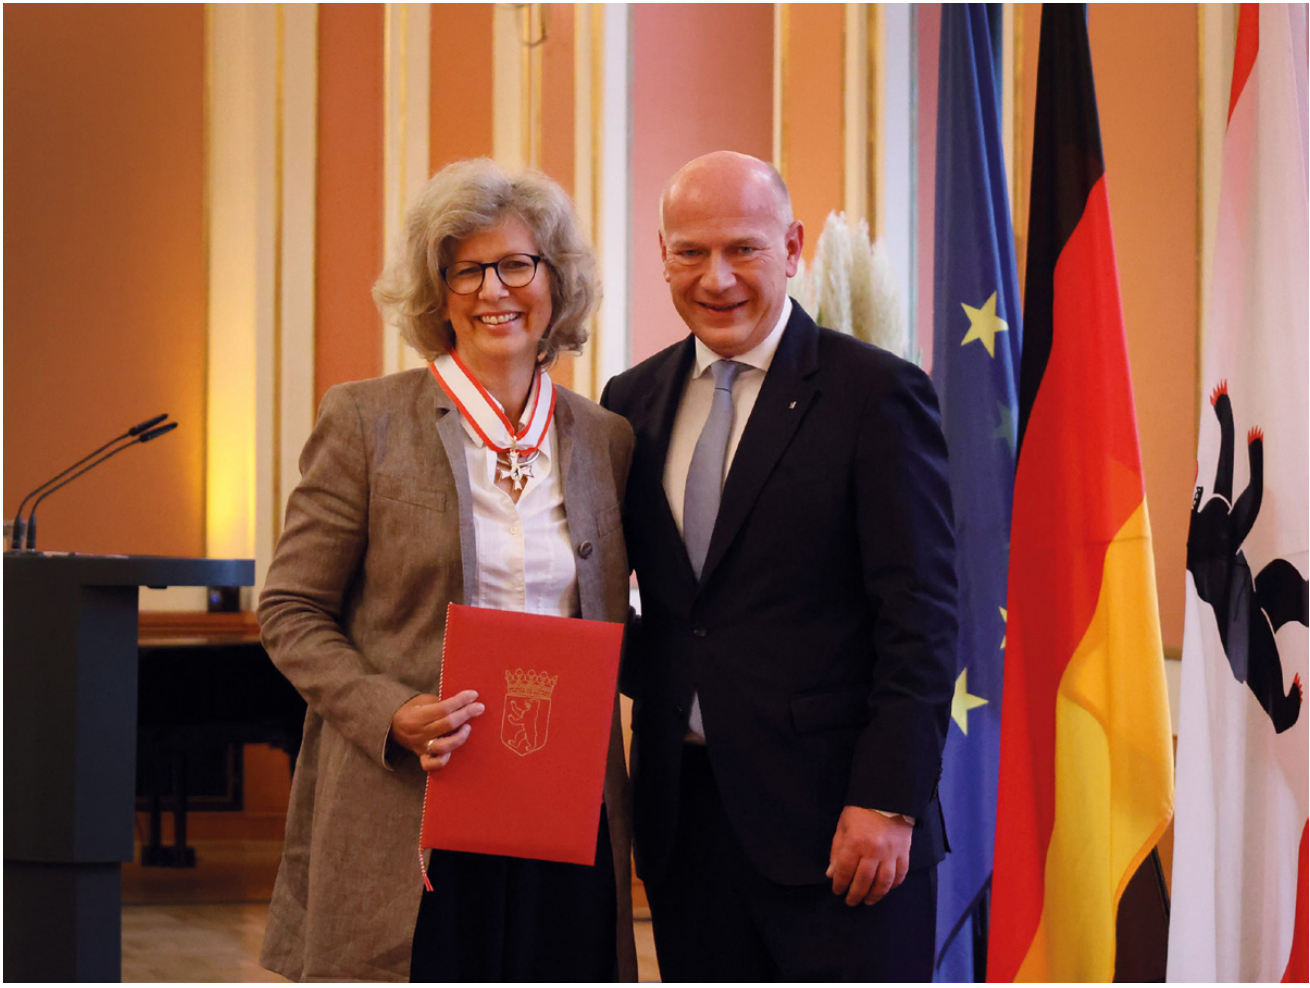 Alexandra Knauer and the Governing Mayor of Berlin, Kai Wegner. | Image Credit: © Knauer